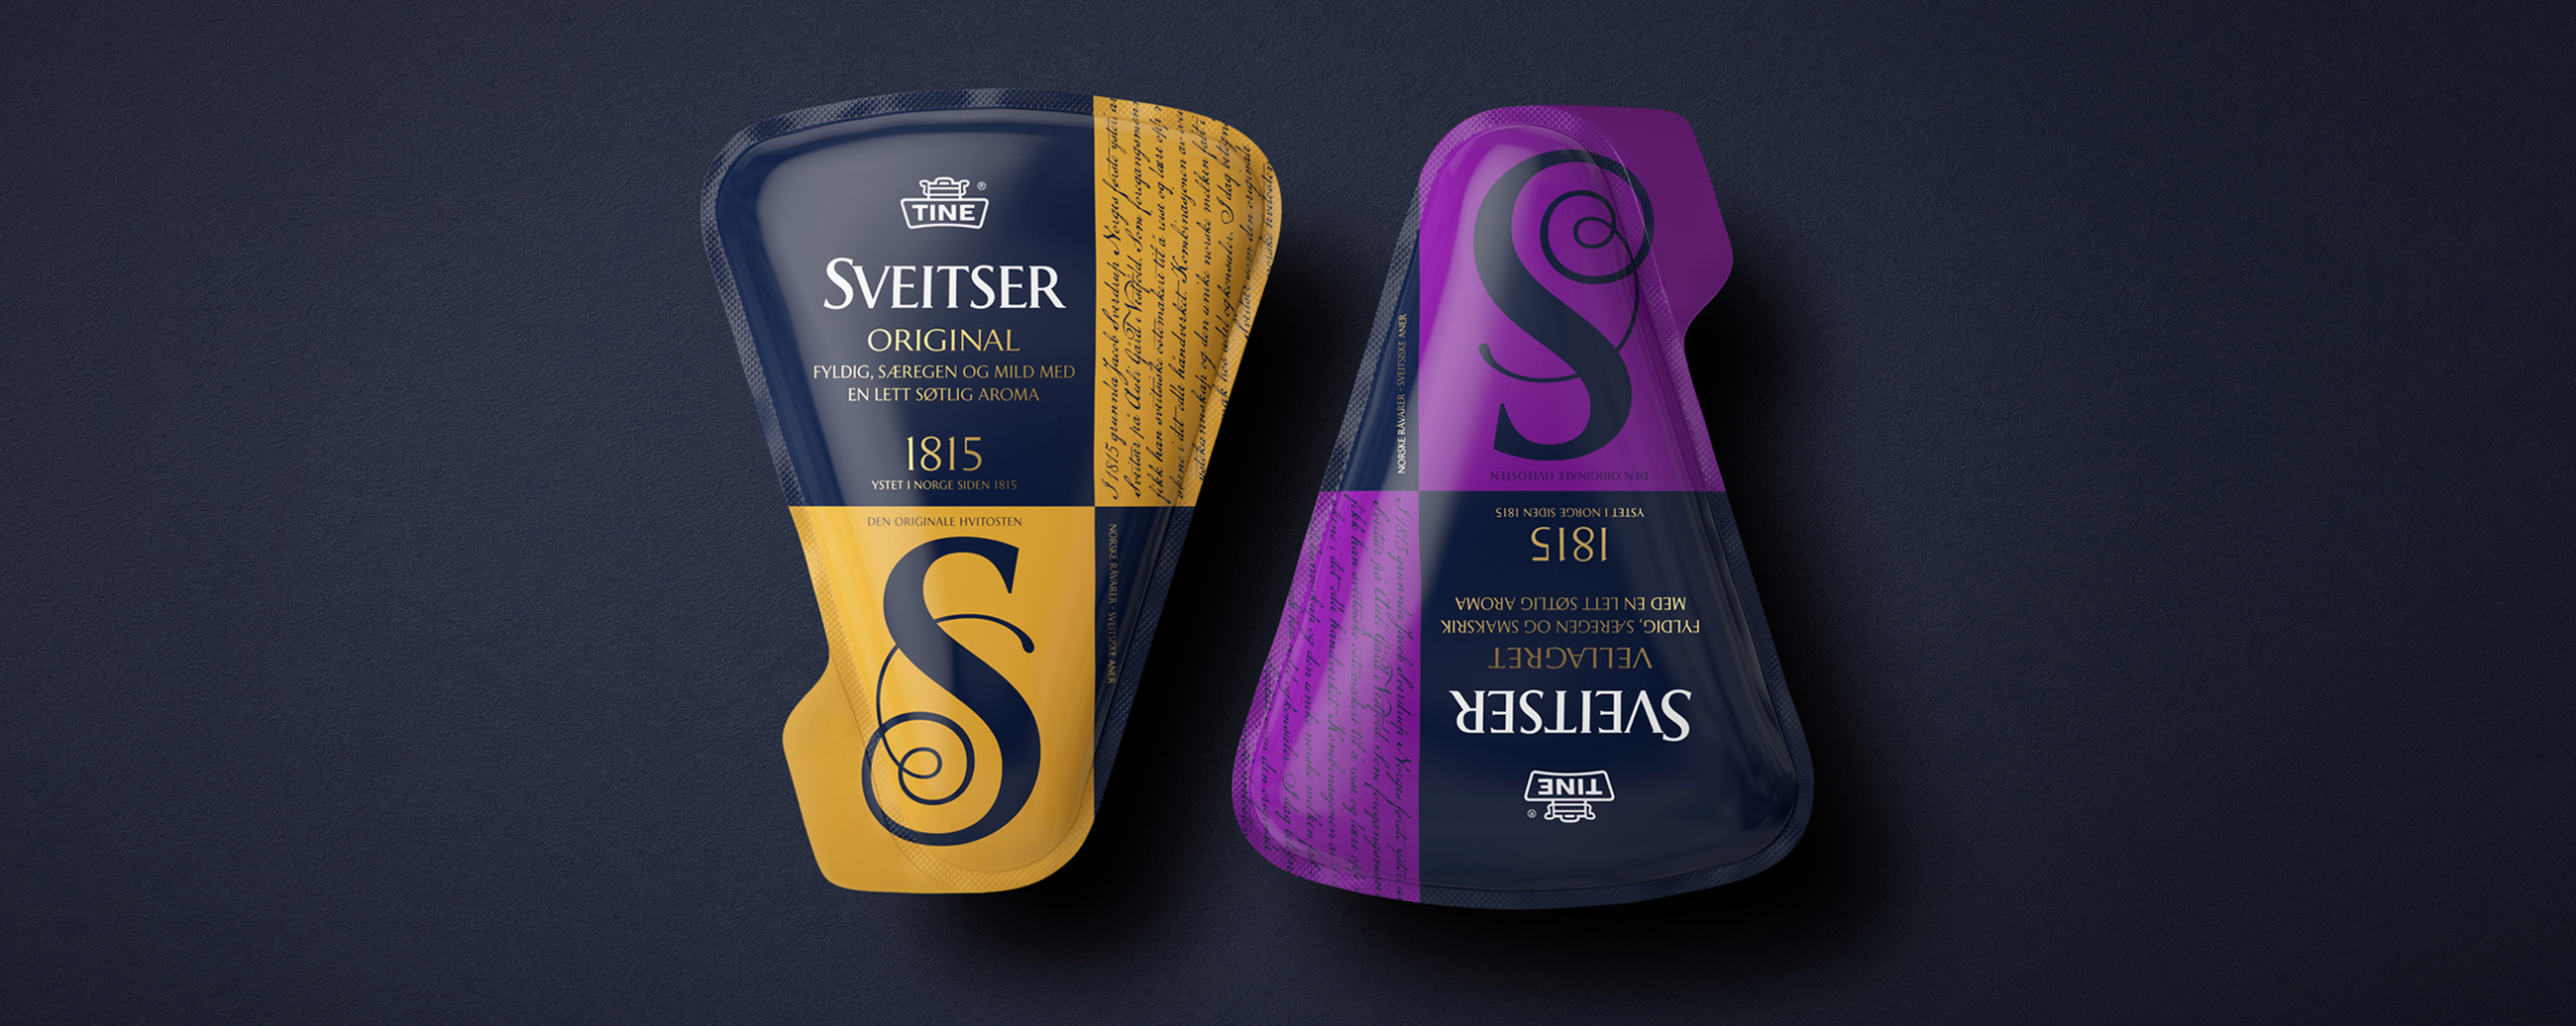 Tine OsteCompagniet Sveitser orginal og vellagret swiss cheese. Emballasje packaging design.